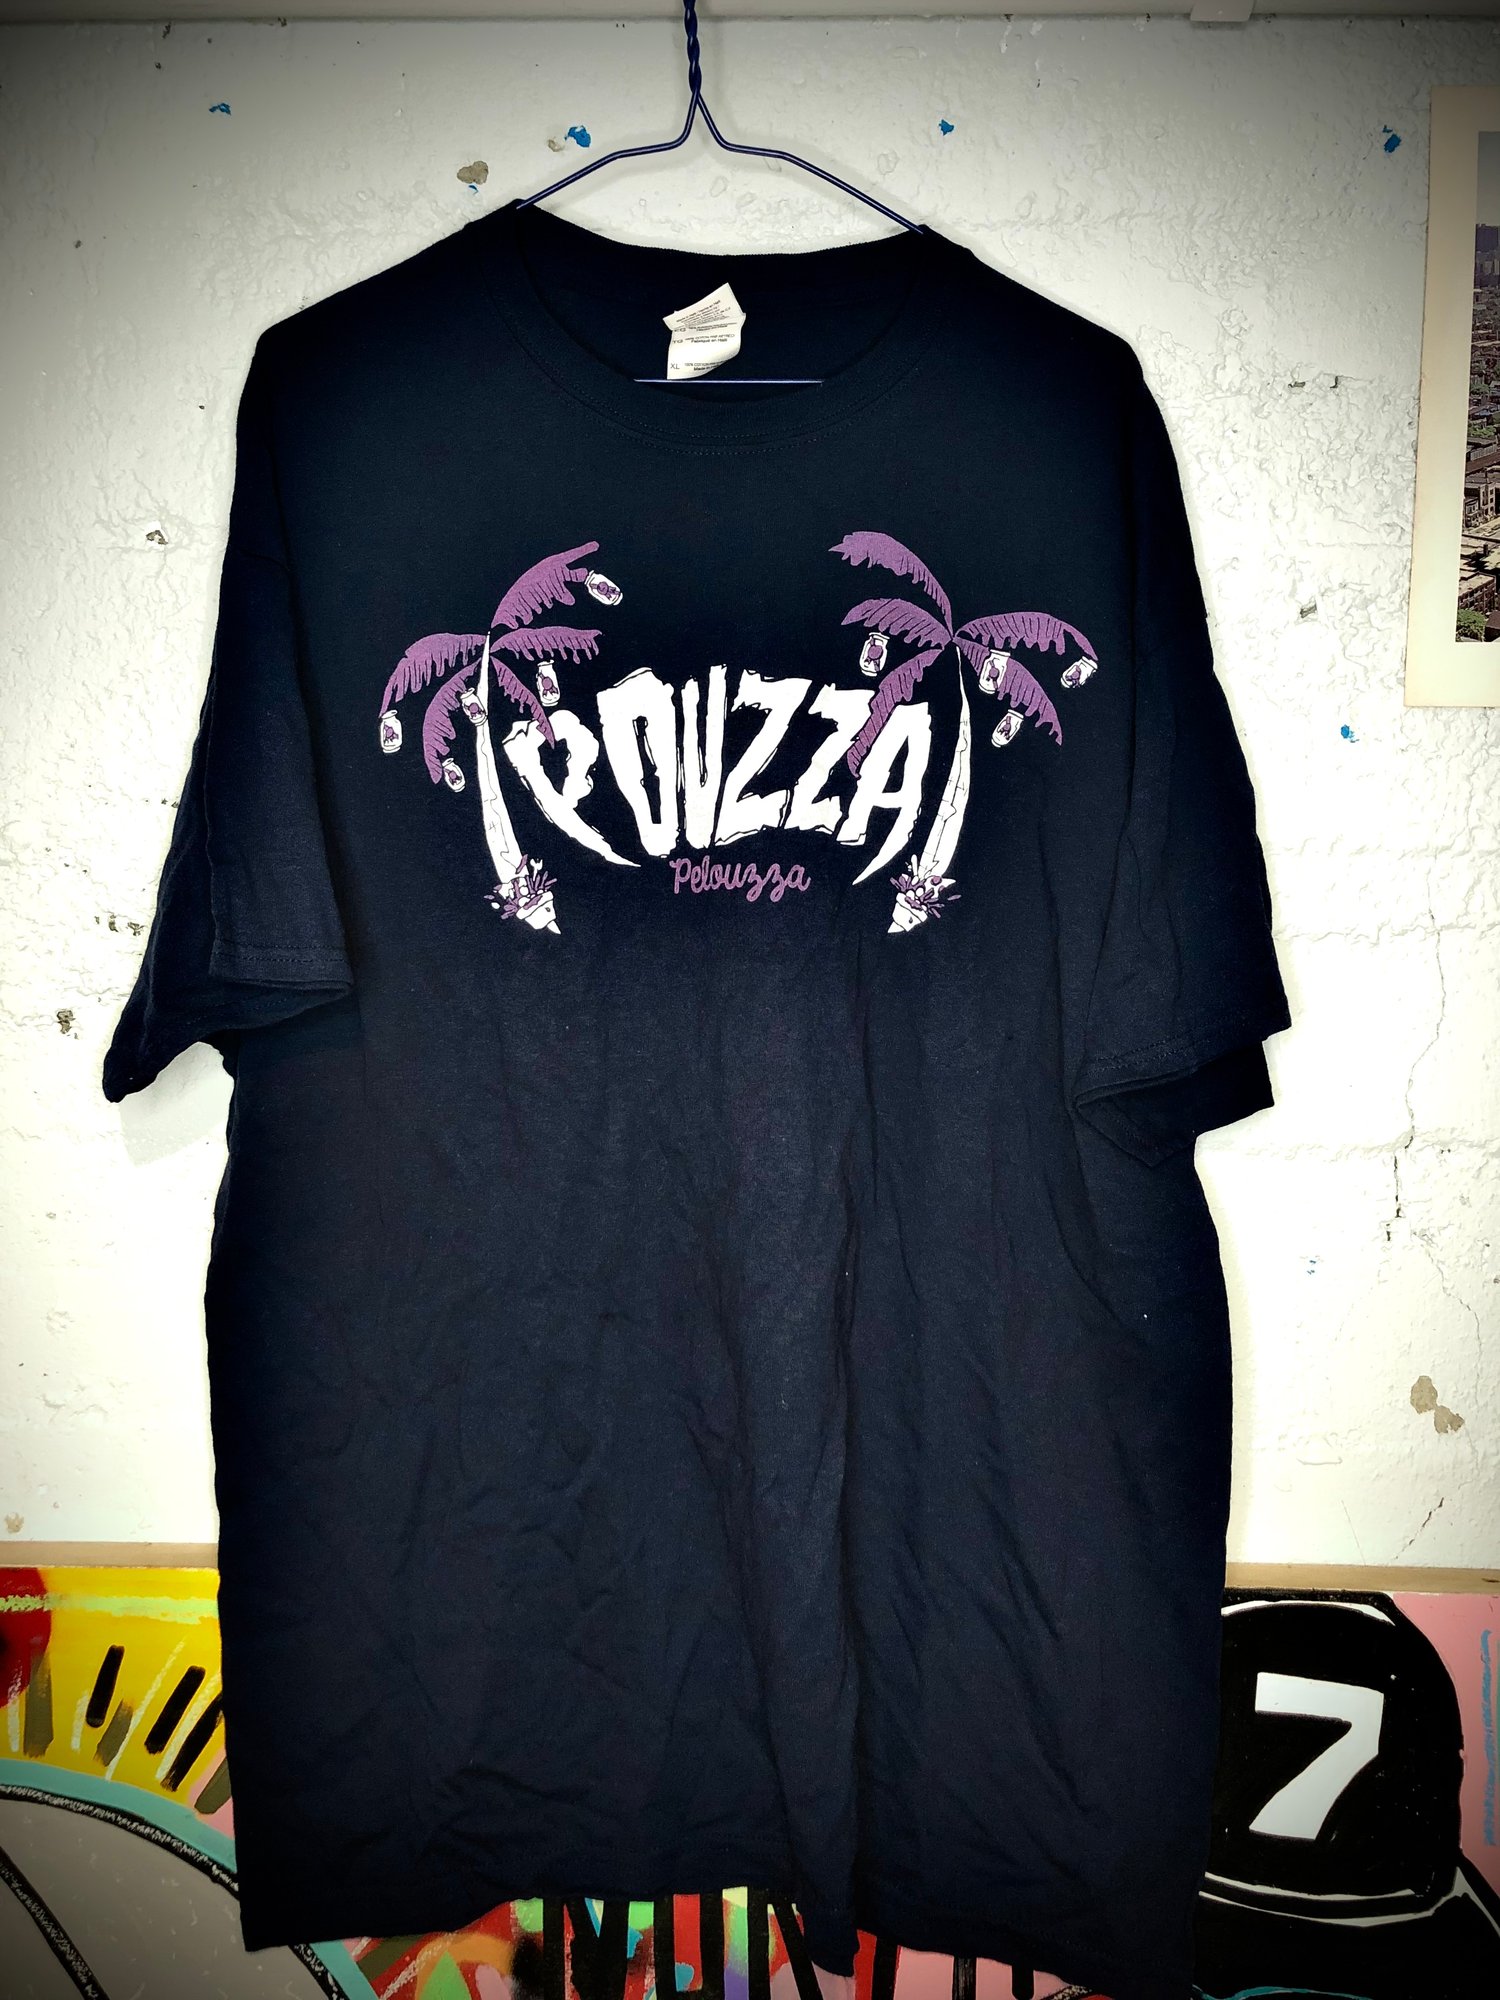 Image of Pouzza Pelouzza T-shirt ( XL SEULEMENT / ONLY XL )